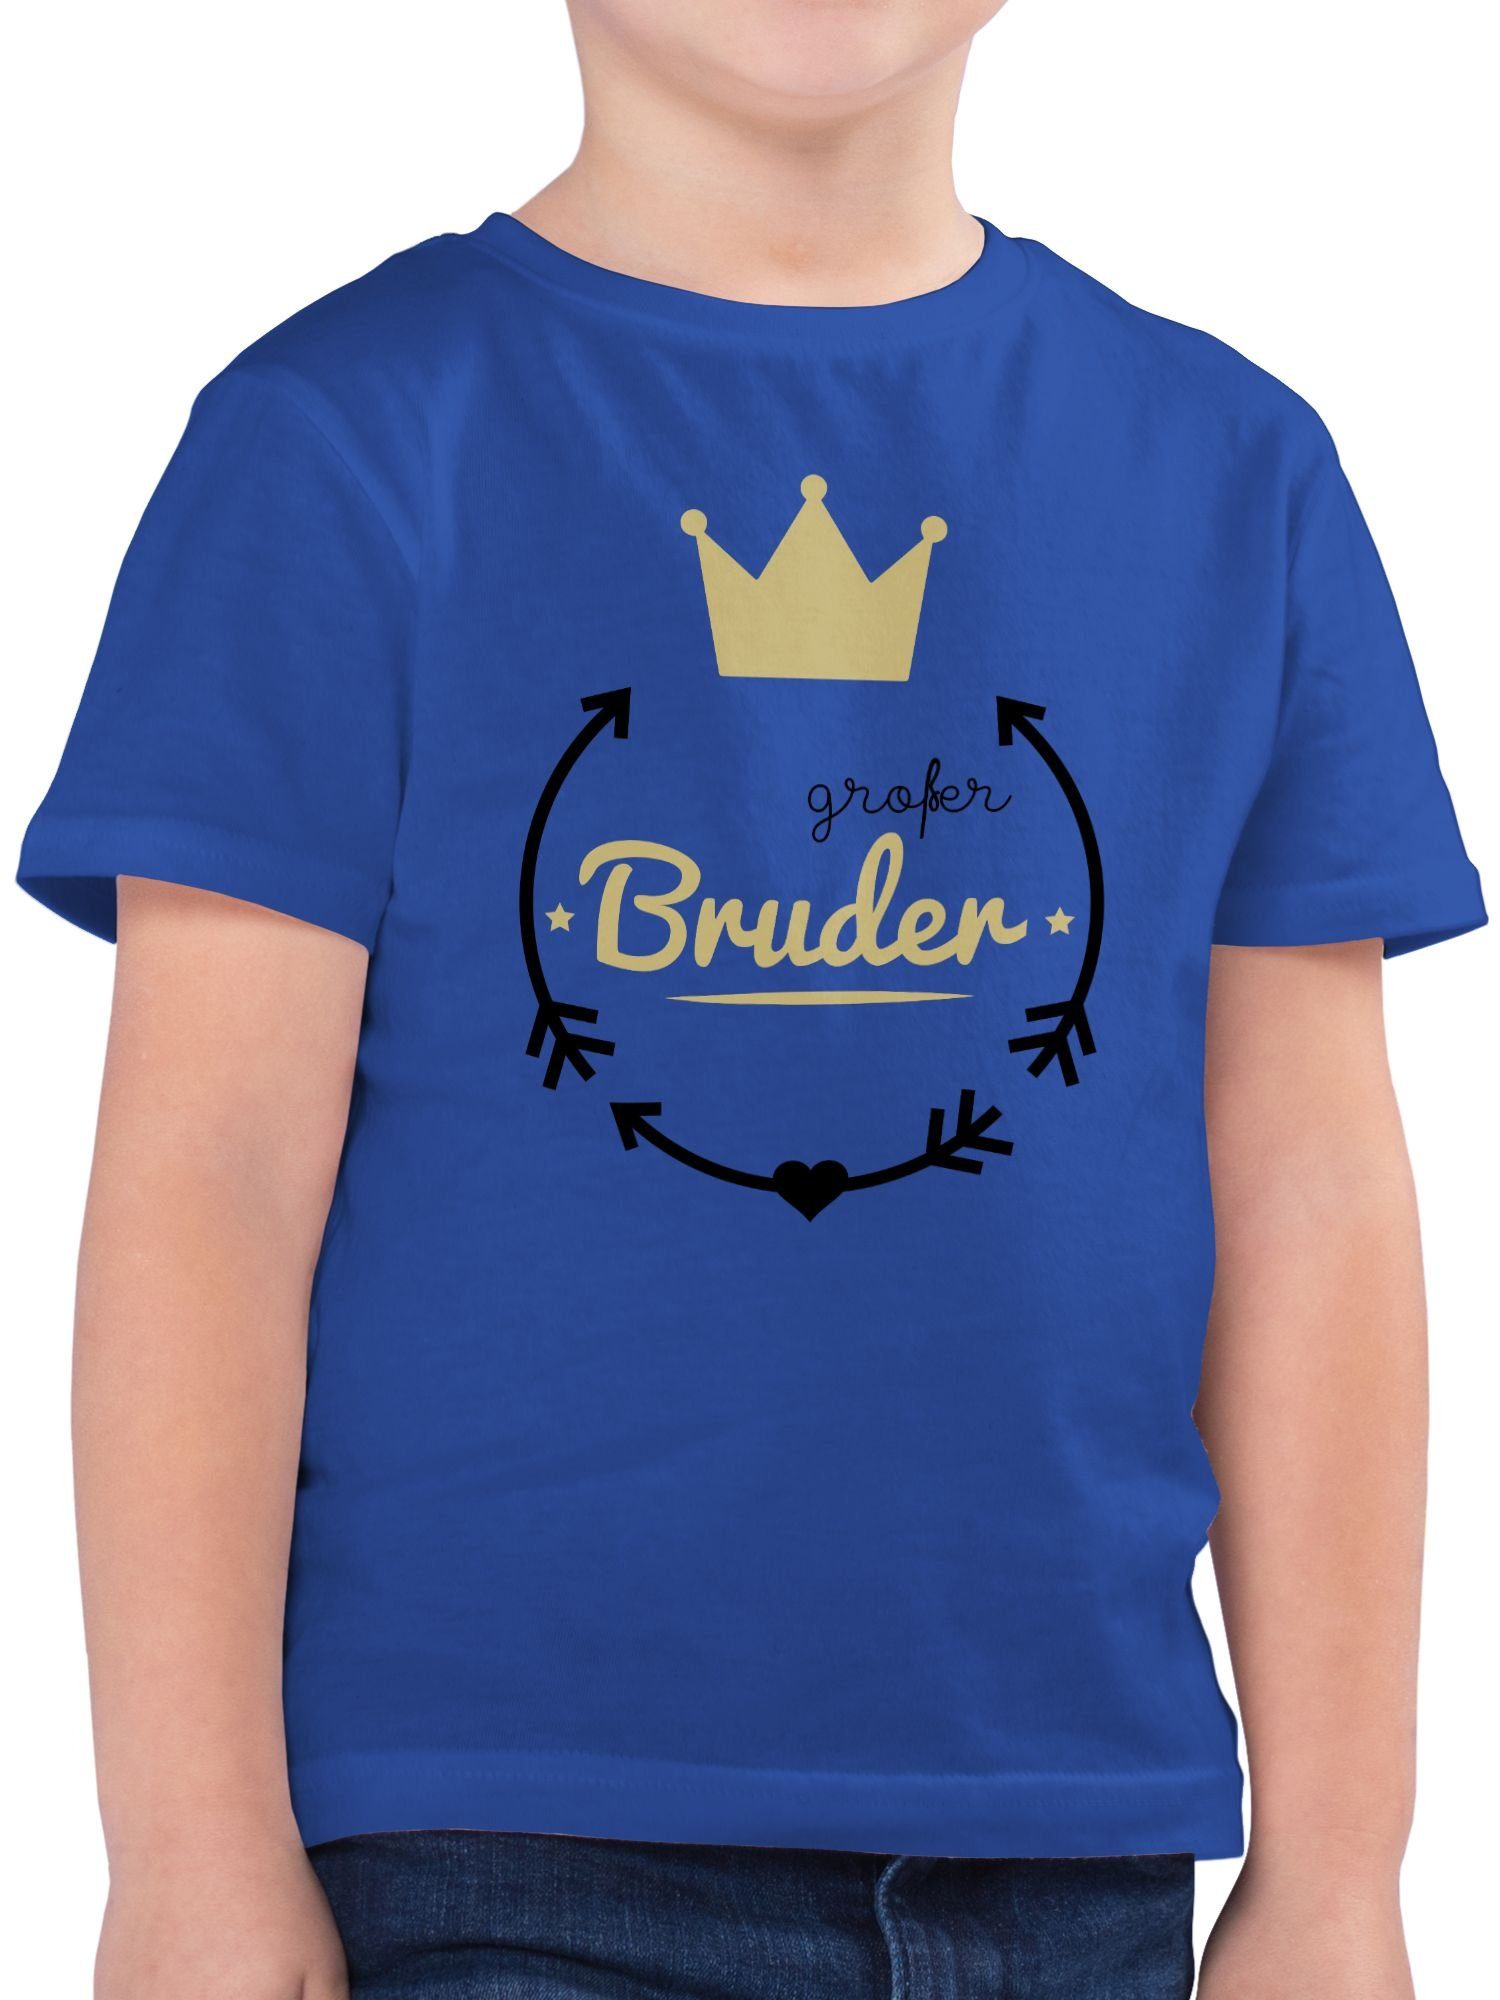 Shirtracer T-Shirt Großer Bruder - Krone Großer Bruder 2 Royalblau